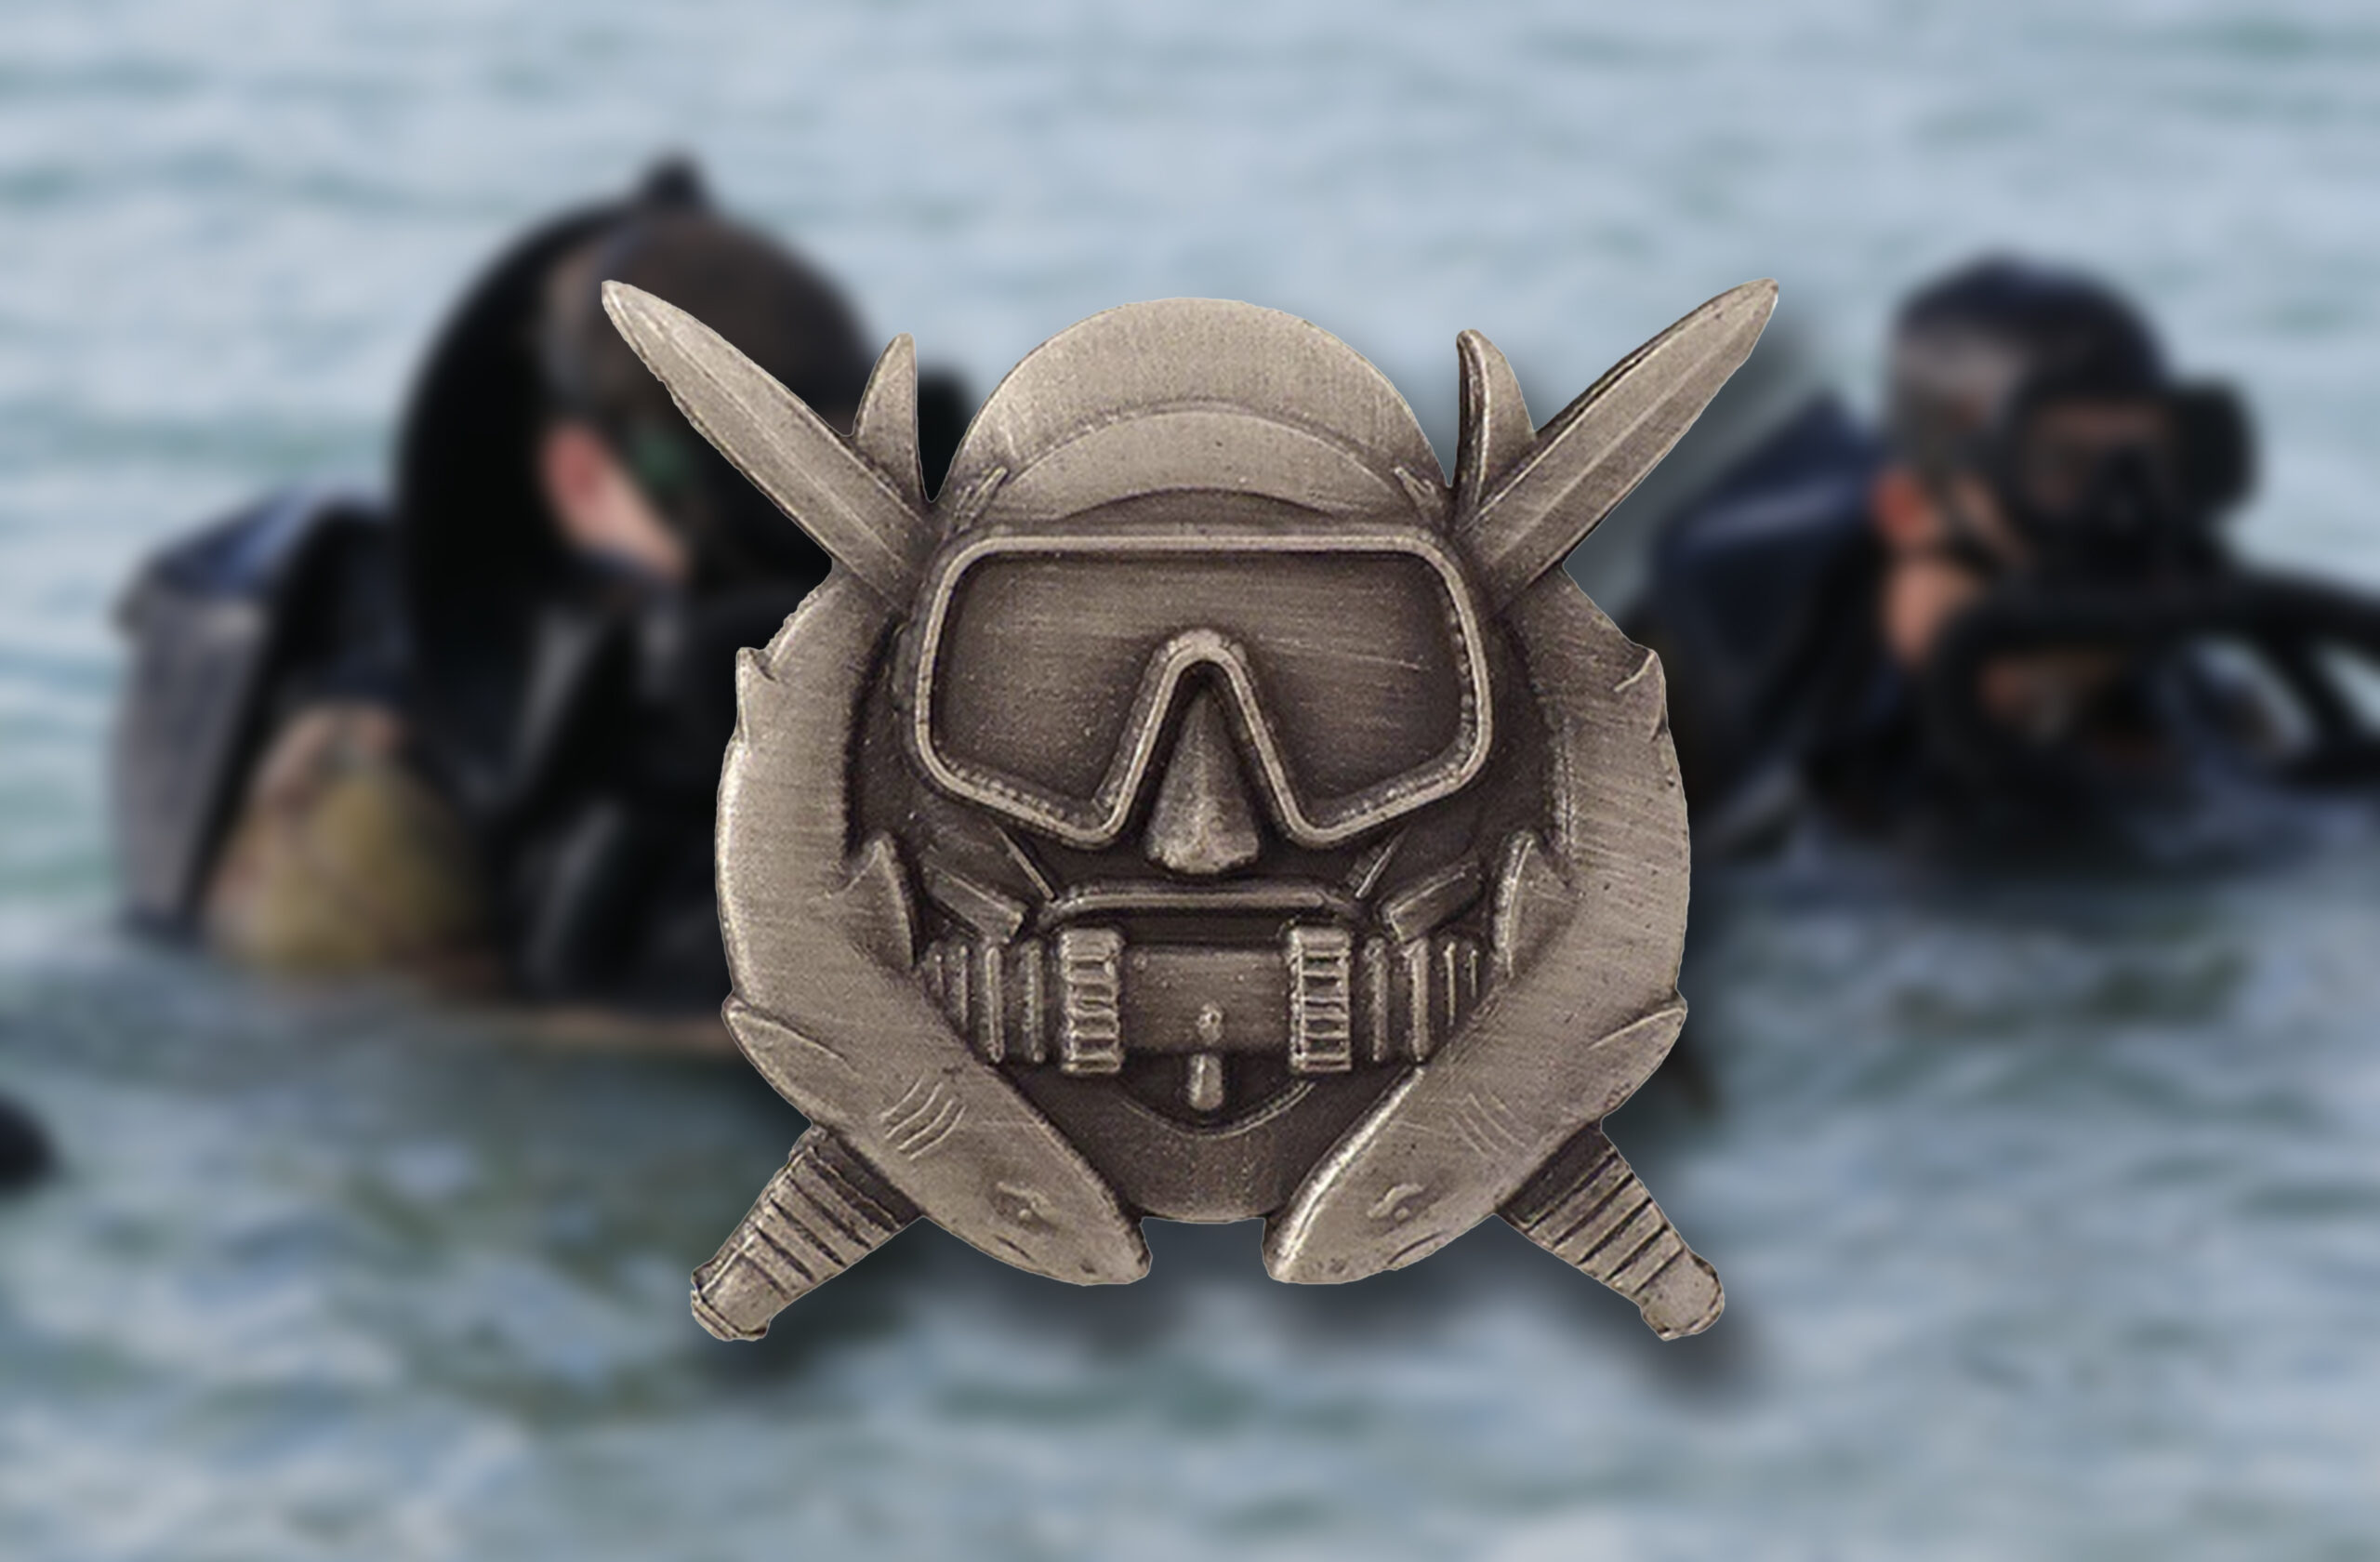 combat diver badge